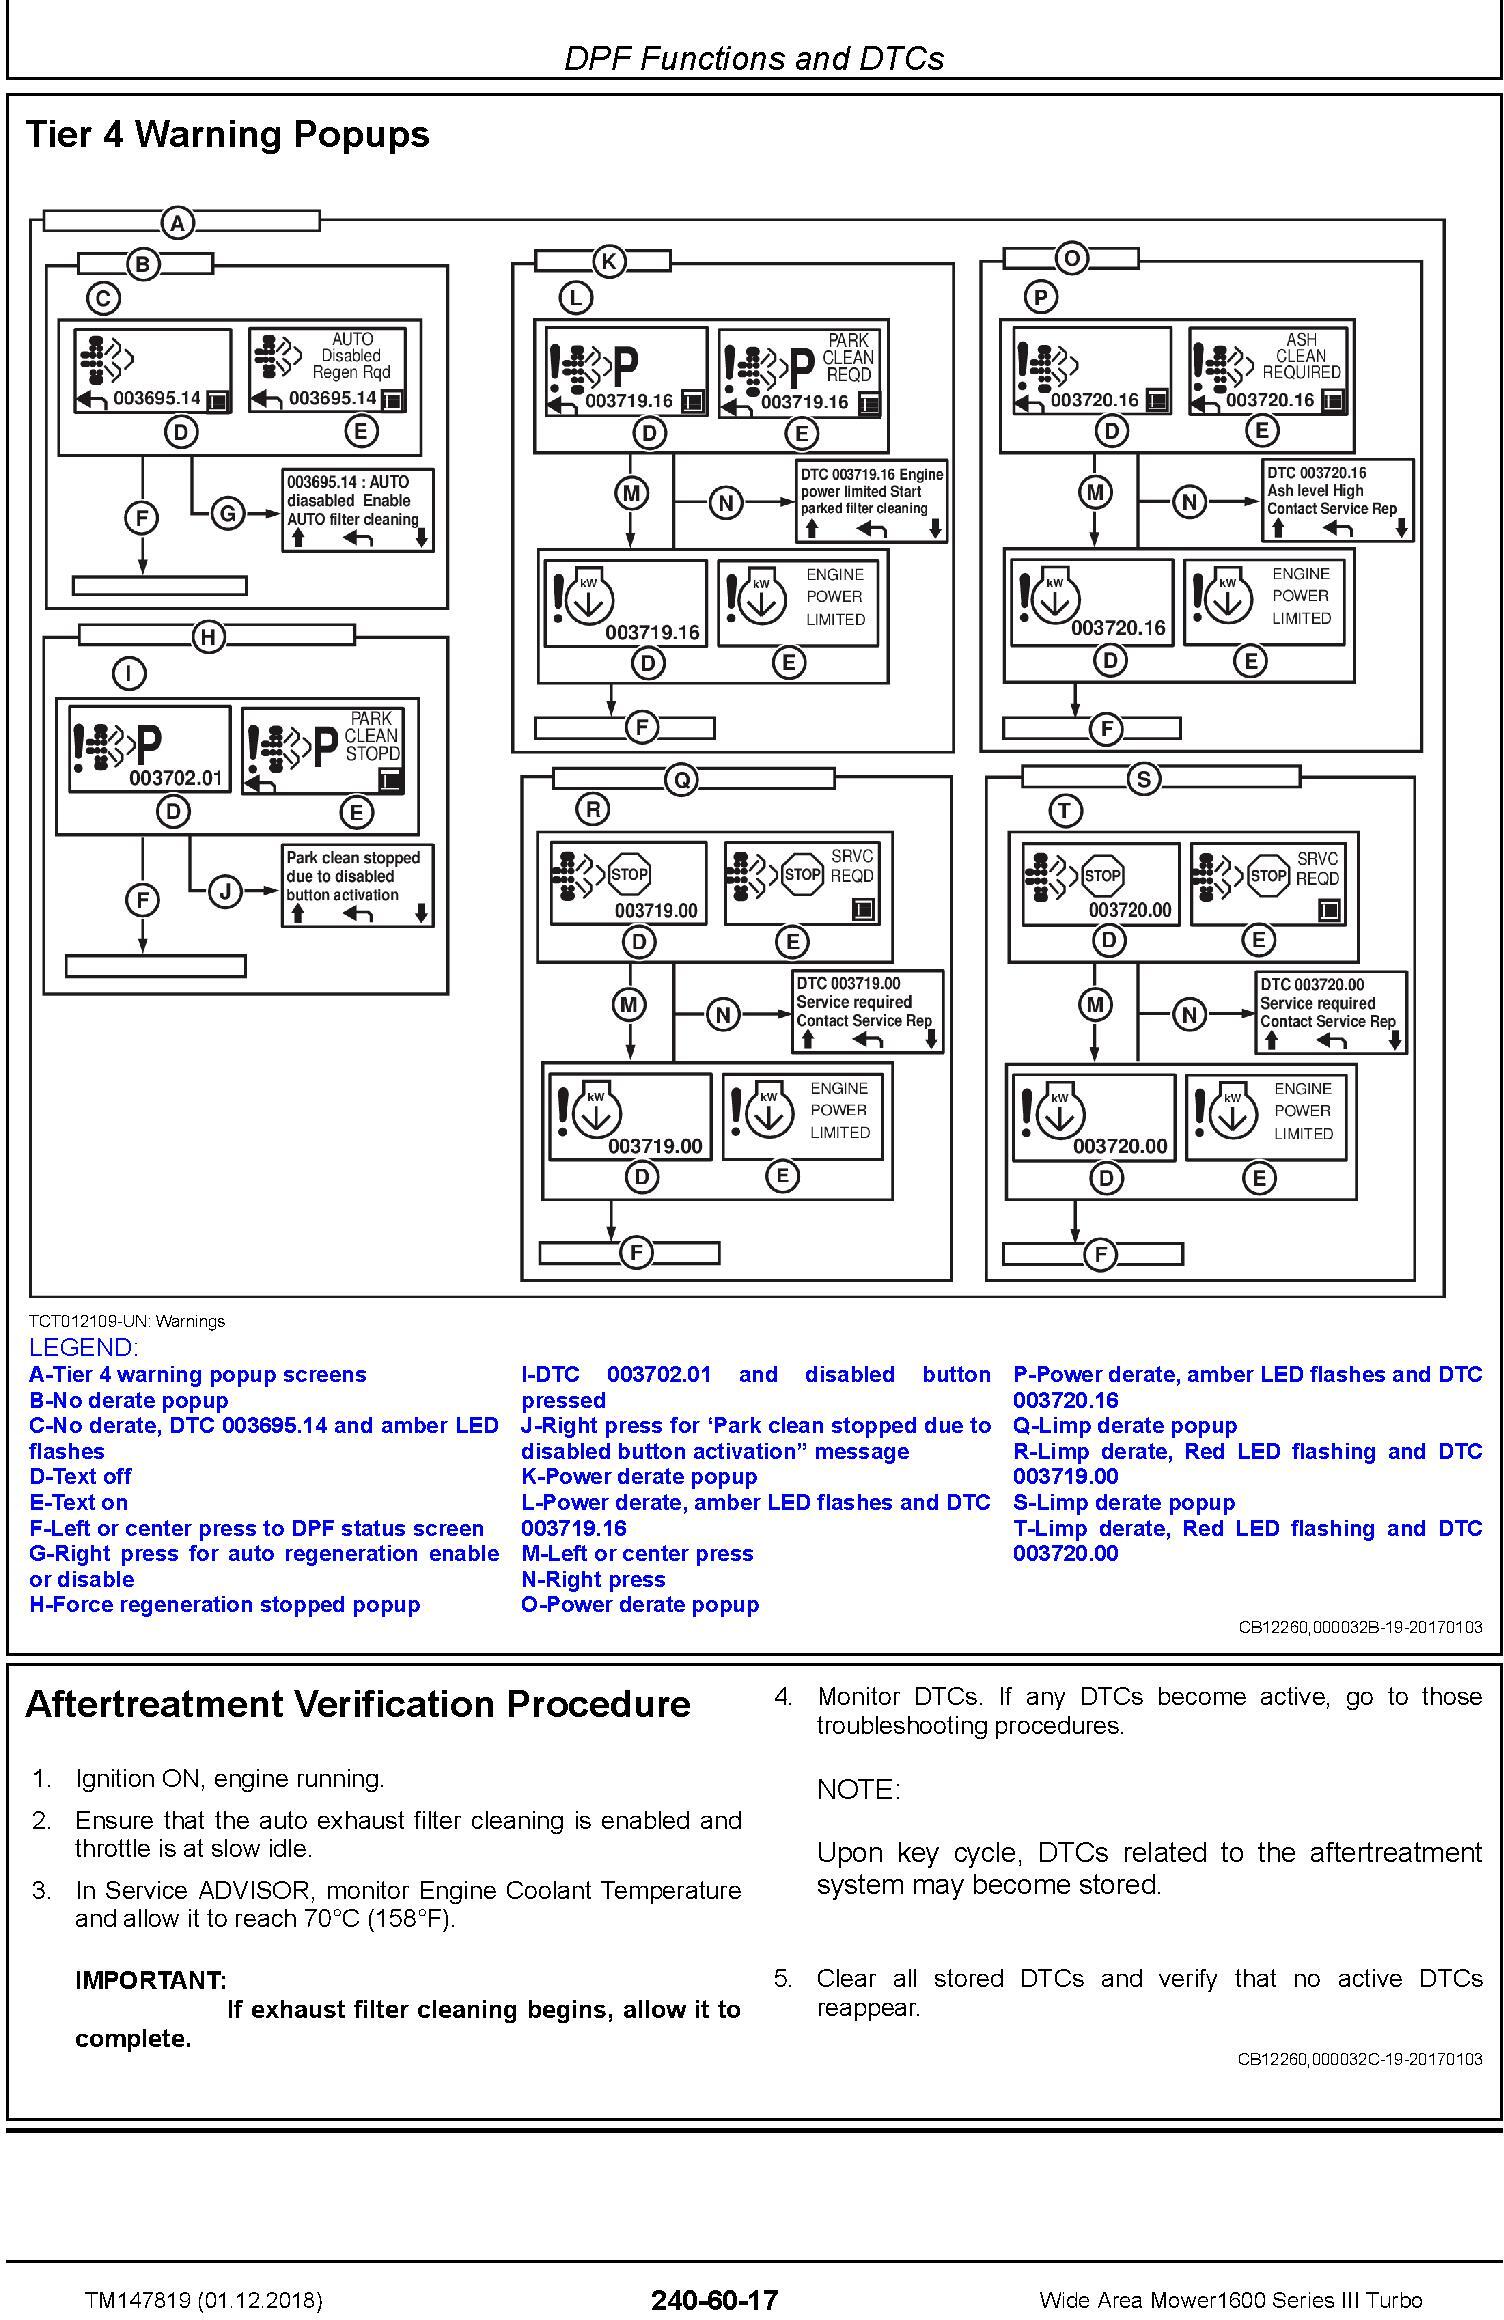 John Deere Wide Area Mower1600 Series III Turbo (SN. 405001-) Technical Manual (TM147819) - 1